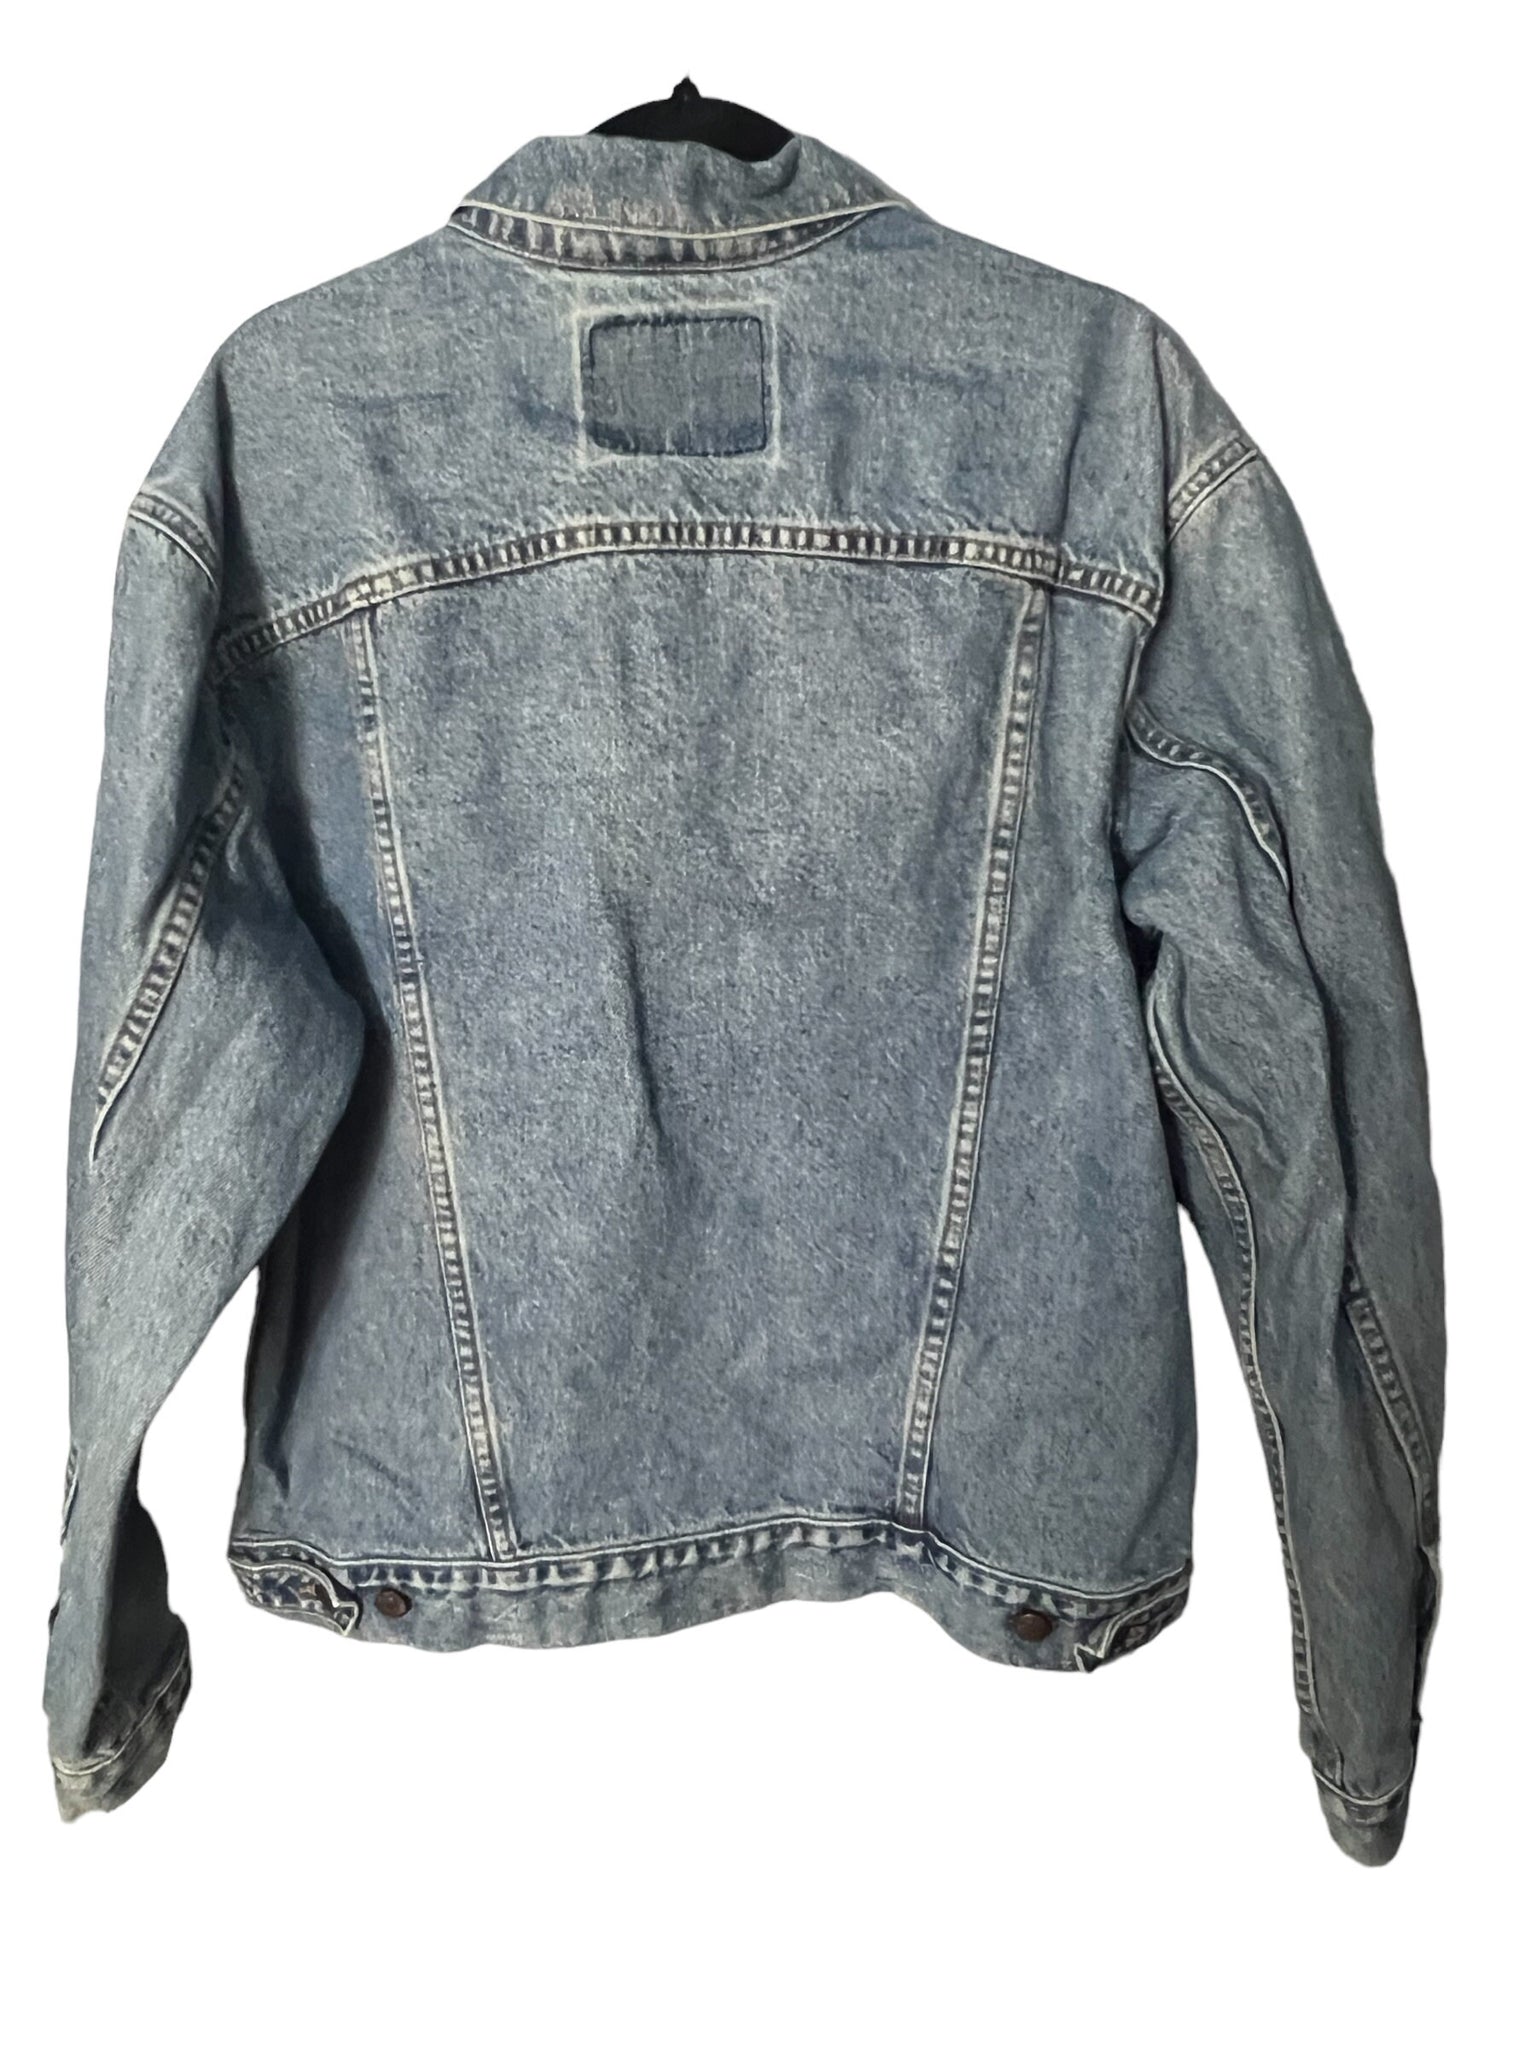 Vintage Levis jean jacket M